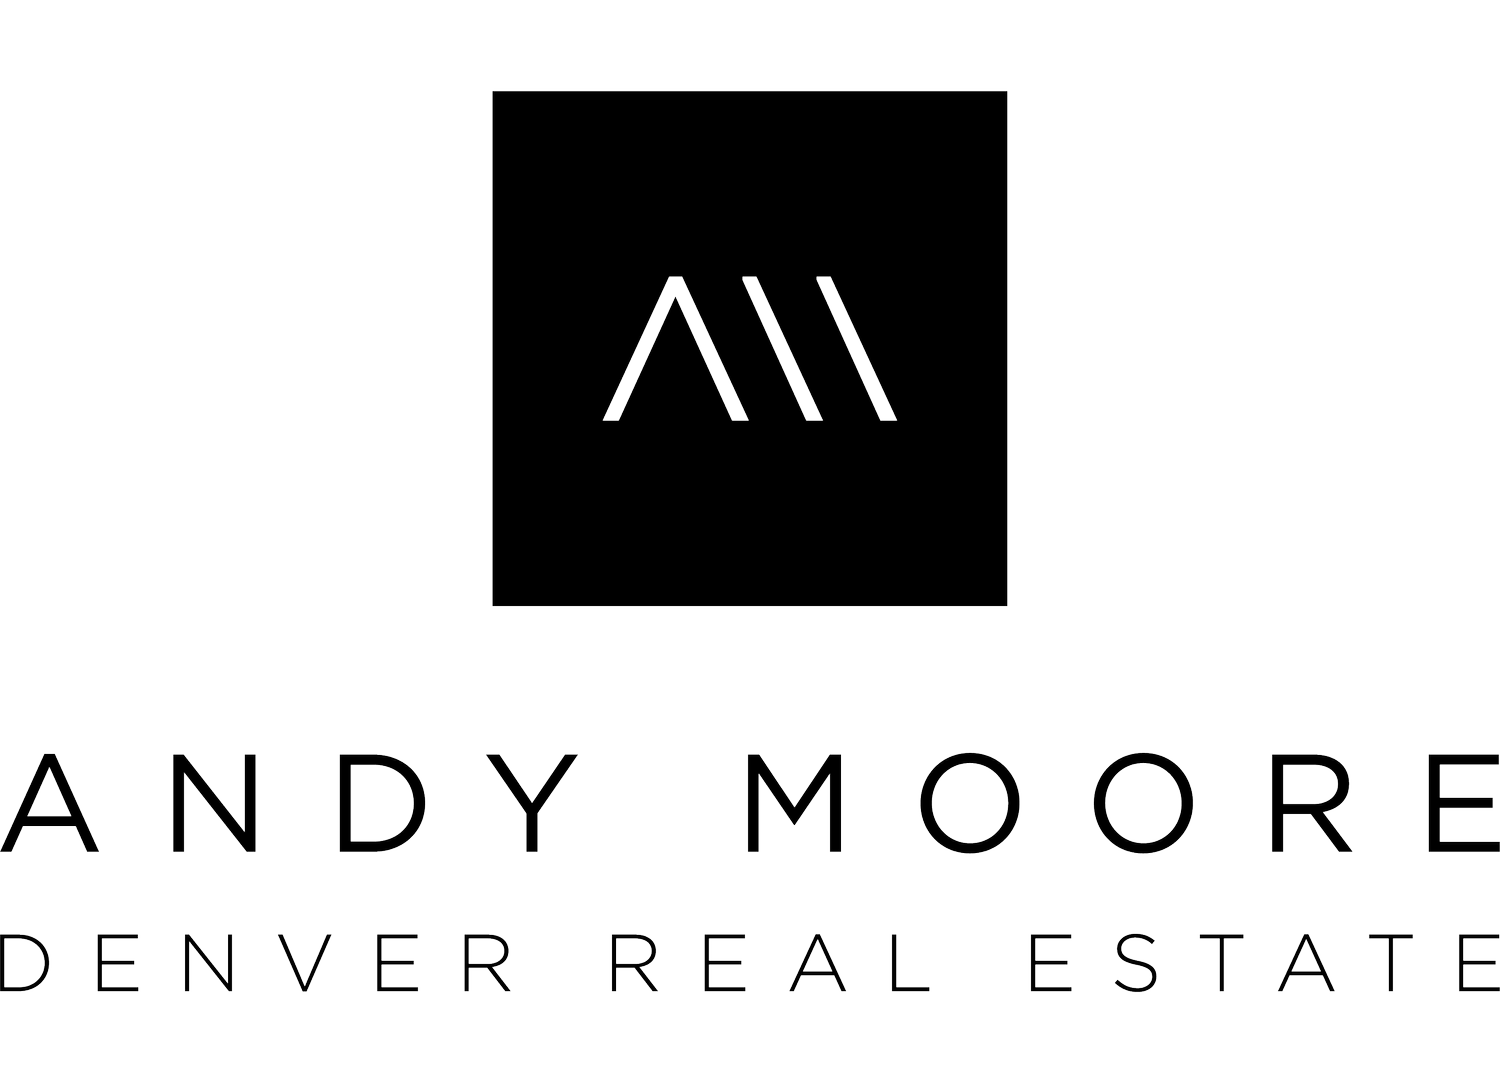 Andy Moore Denver Real Estate